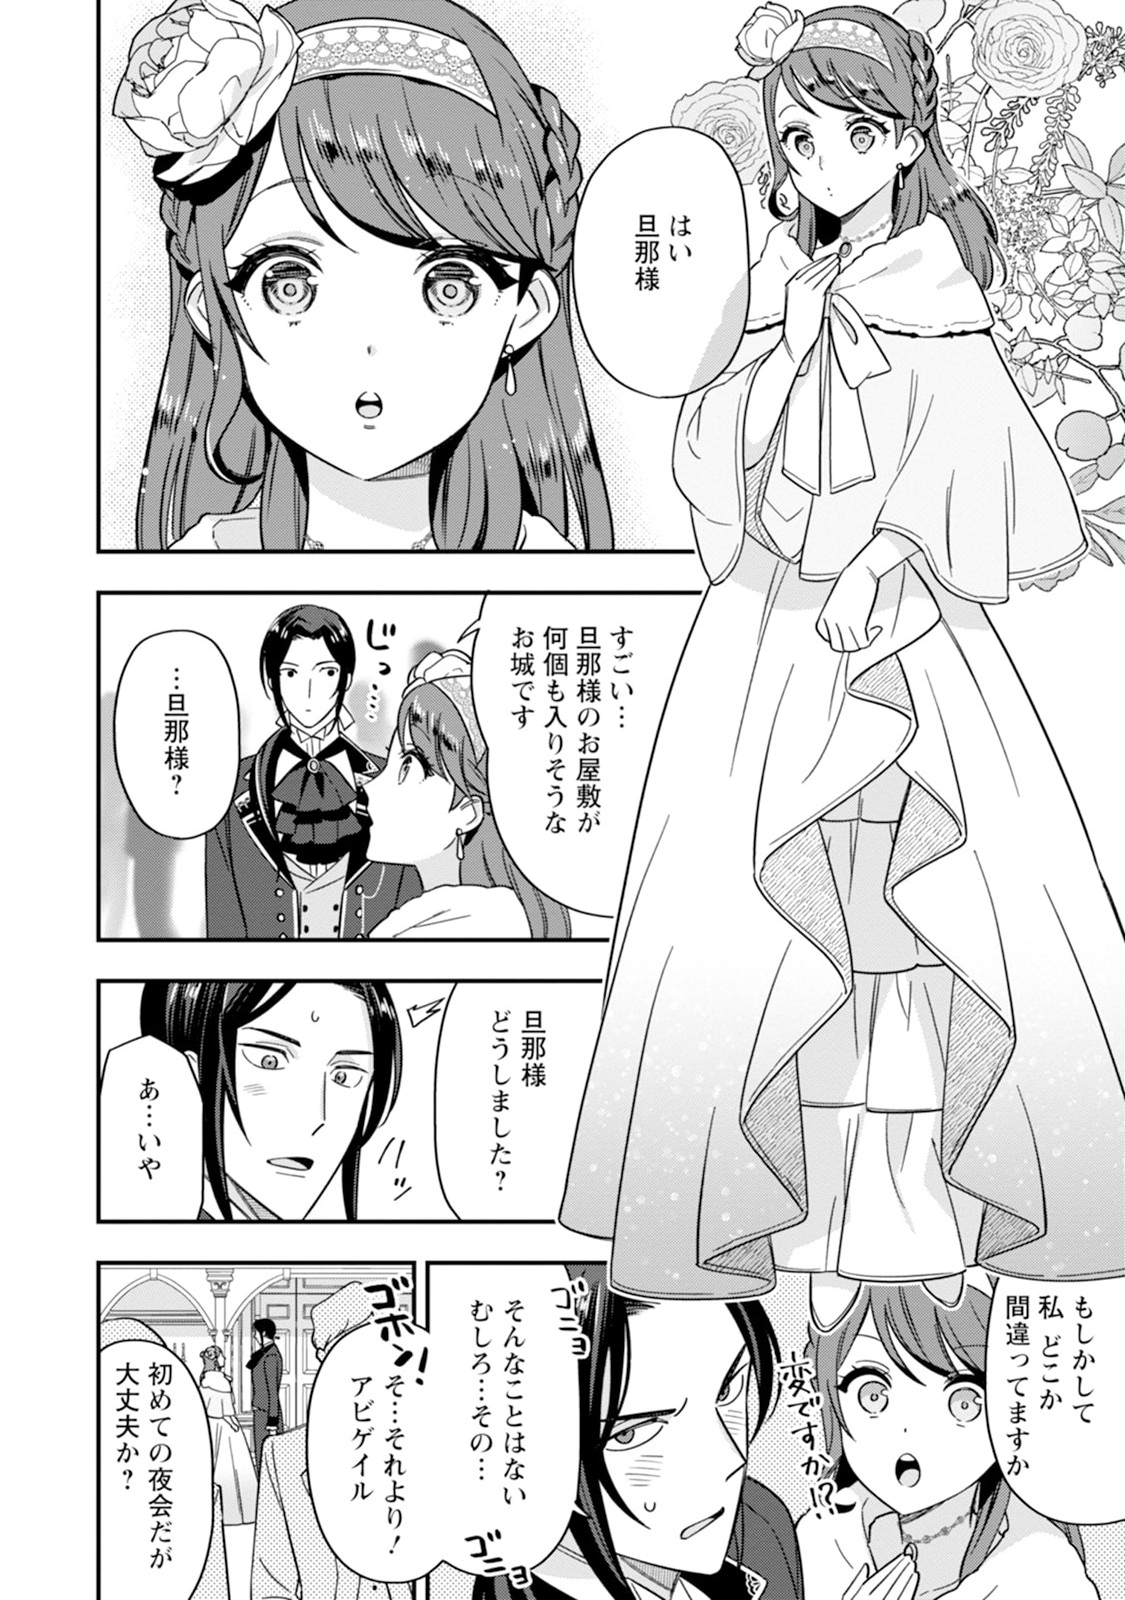 Aisanai to Iwaremashite mo - Chapter 2 - Page 30